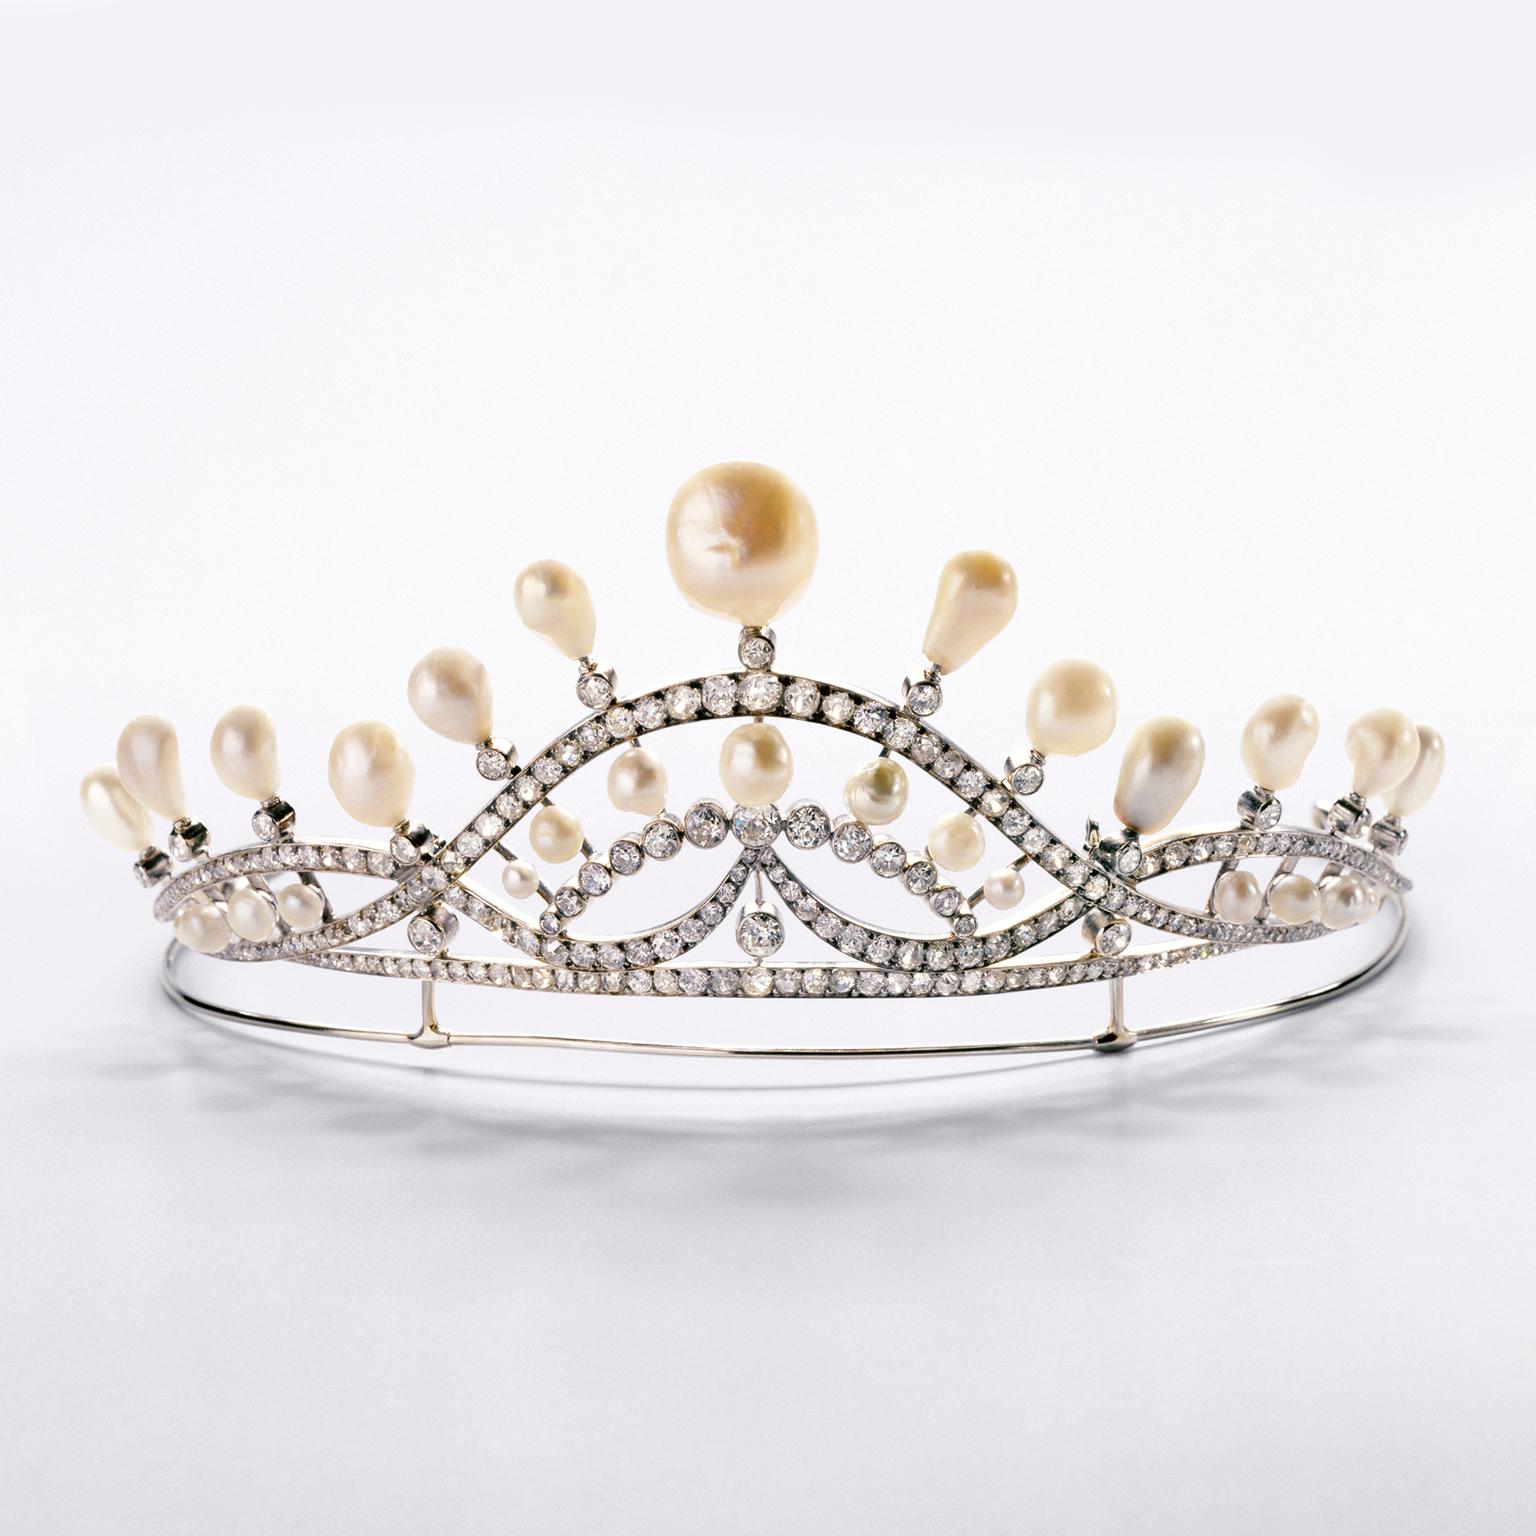 Chaumet Curvilinear tiara